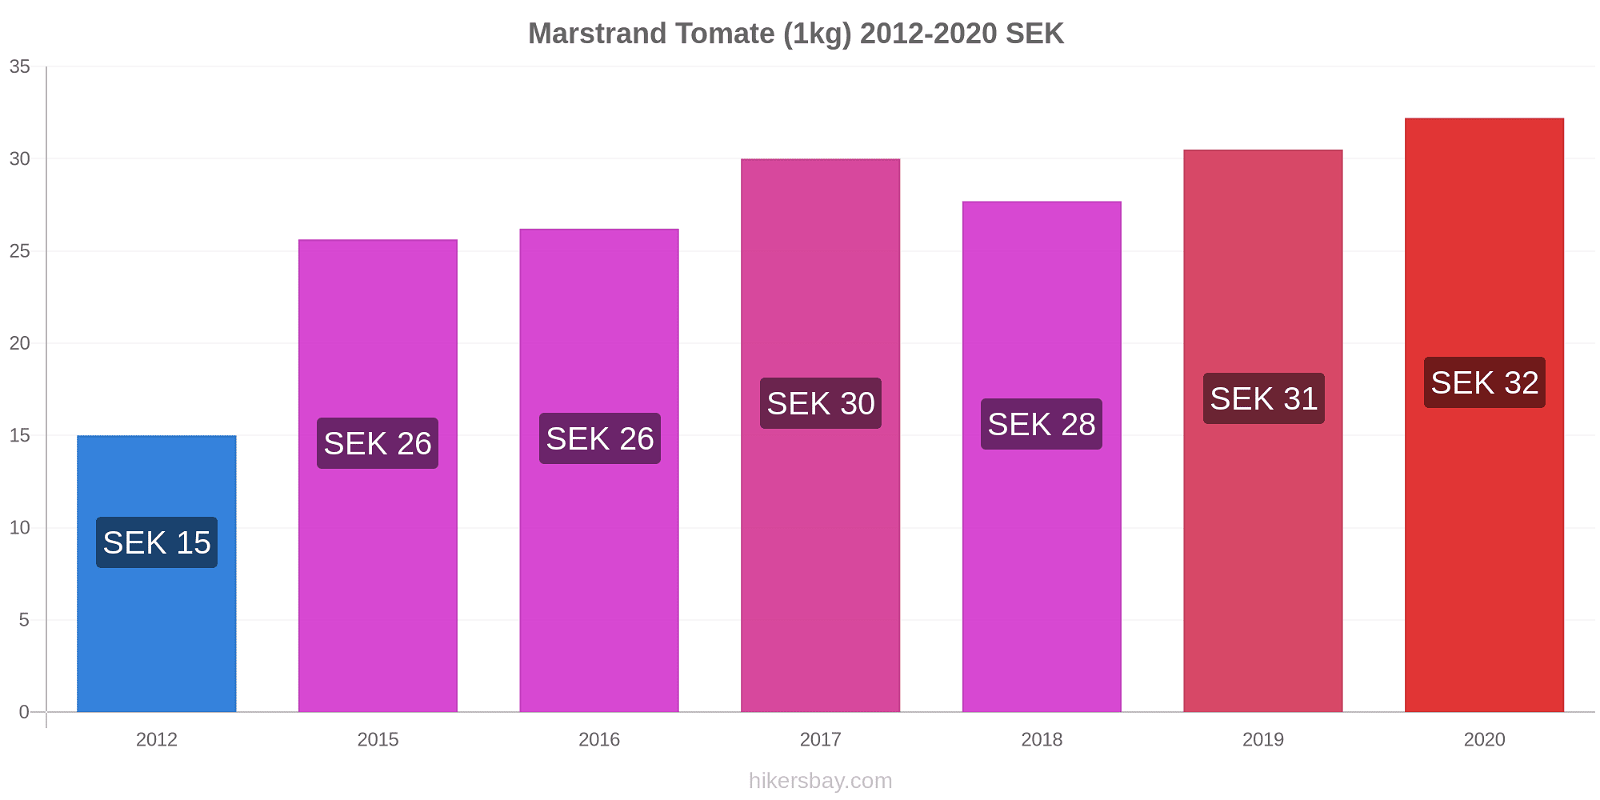 Marstrand changements de prix Tomate (1kg) hikersbay.com